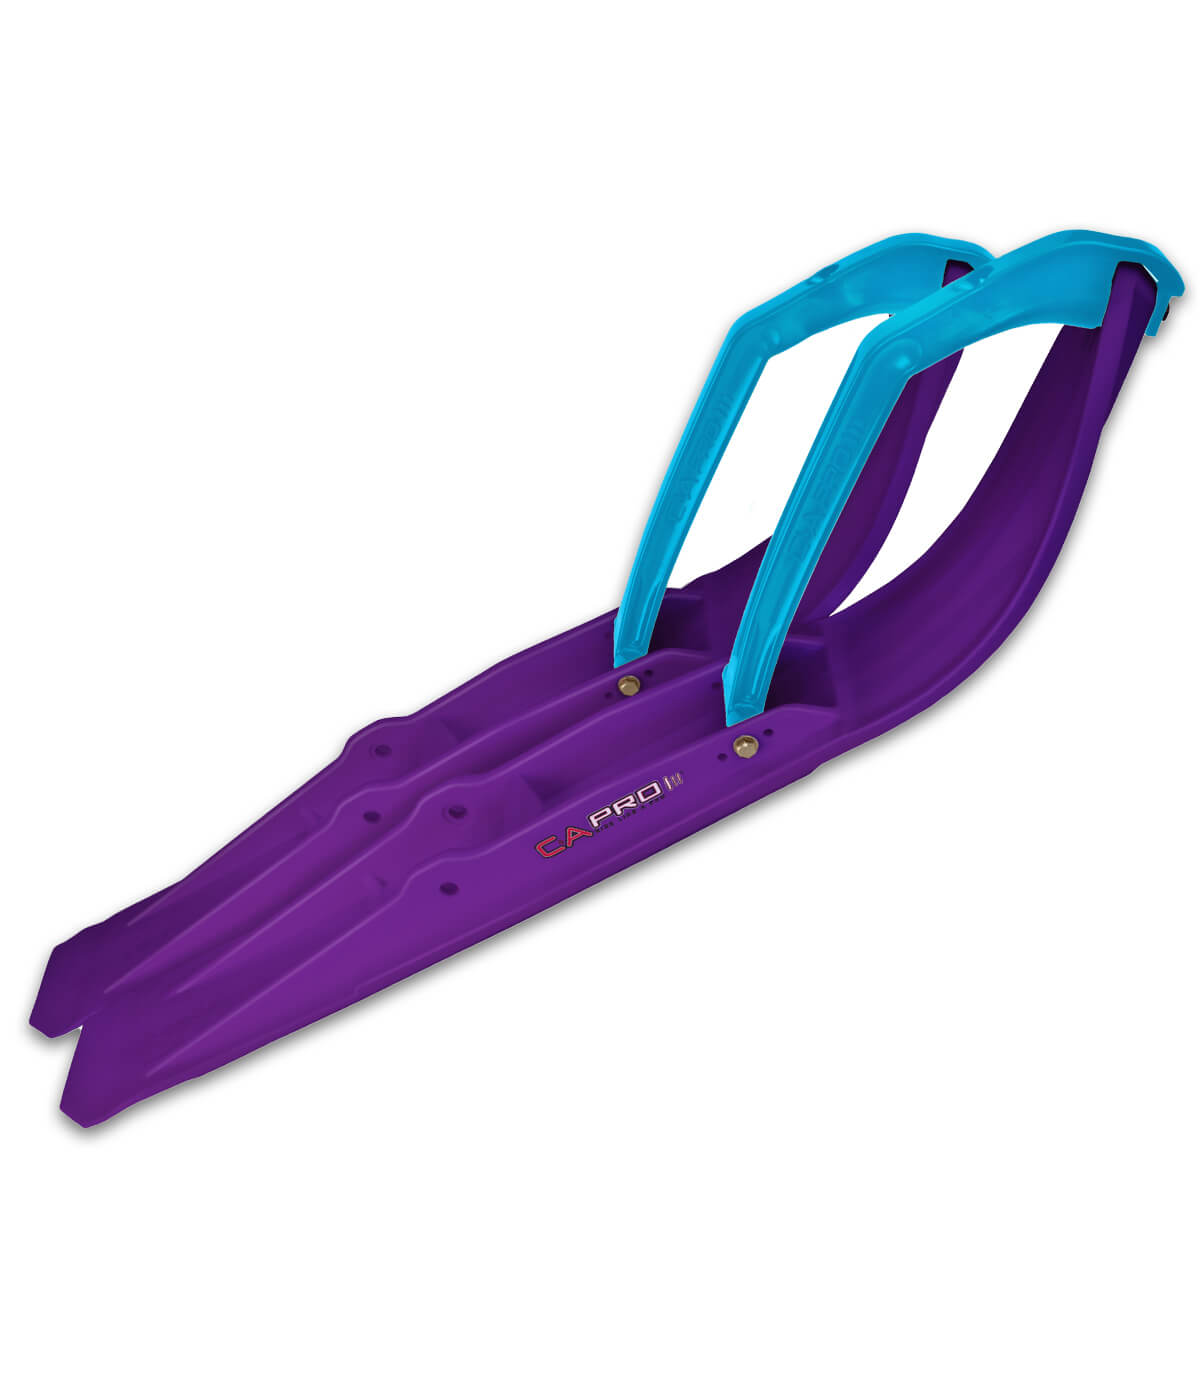 Custom Purple RZ ski with Sky Blue handles